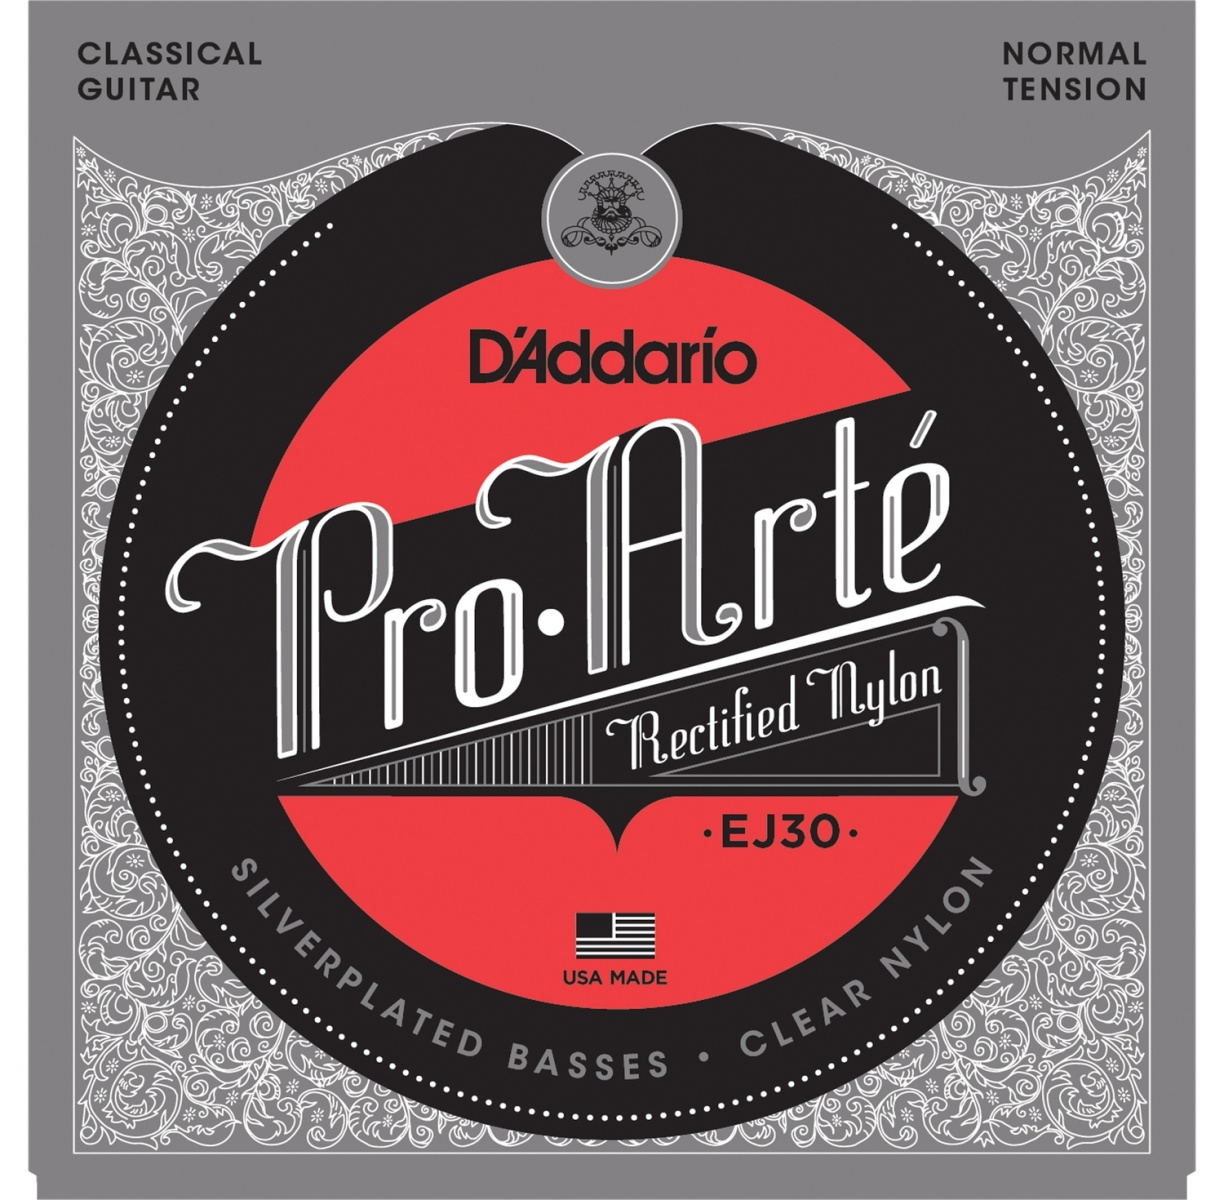 D'Addario EJ30 - струны для классич. гит, серебро (Silver), Normal Tension купить в prostore.me